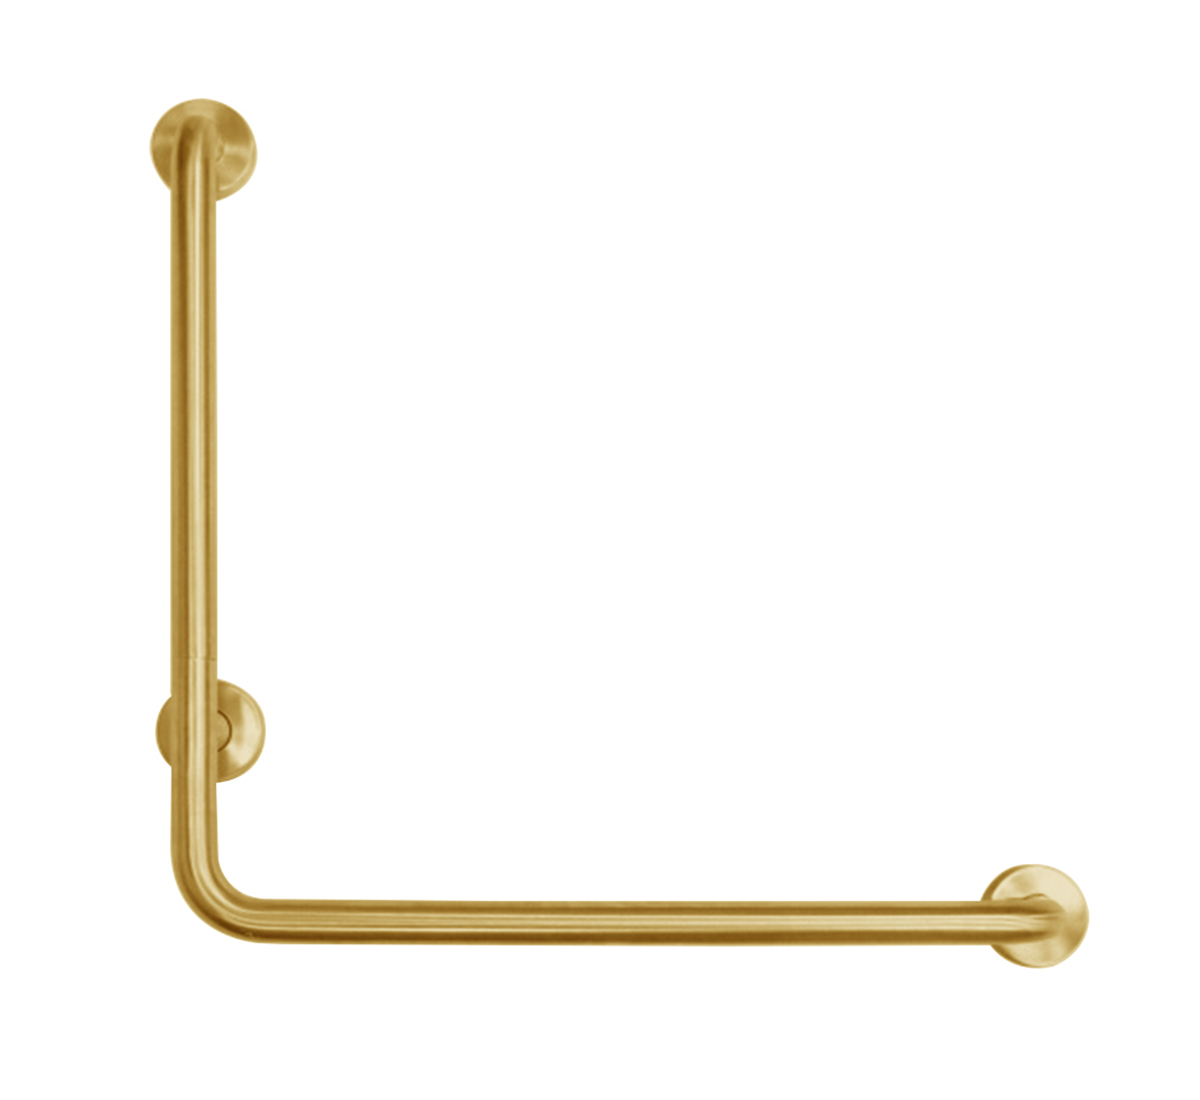 304 Stainless Steel Gold Handicap Grab Bar Handrail
